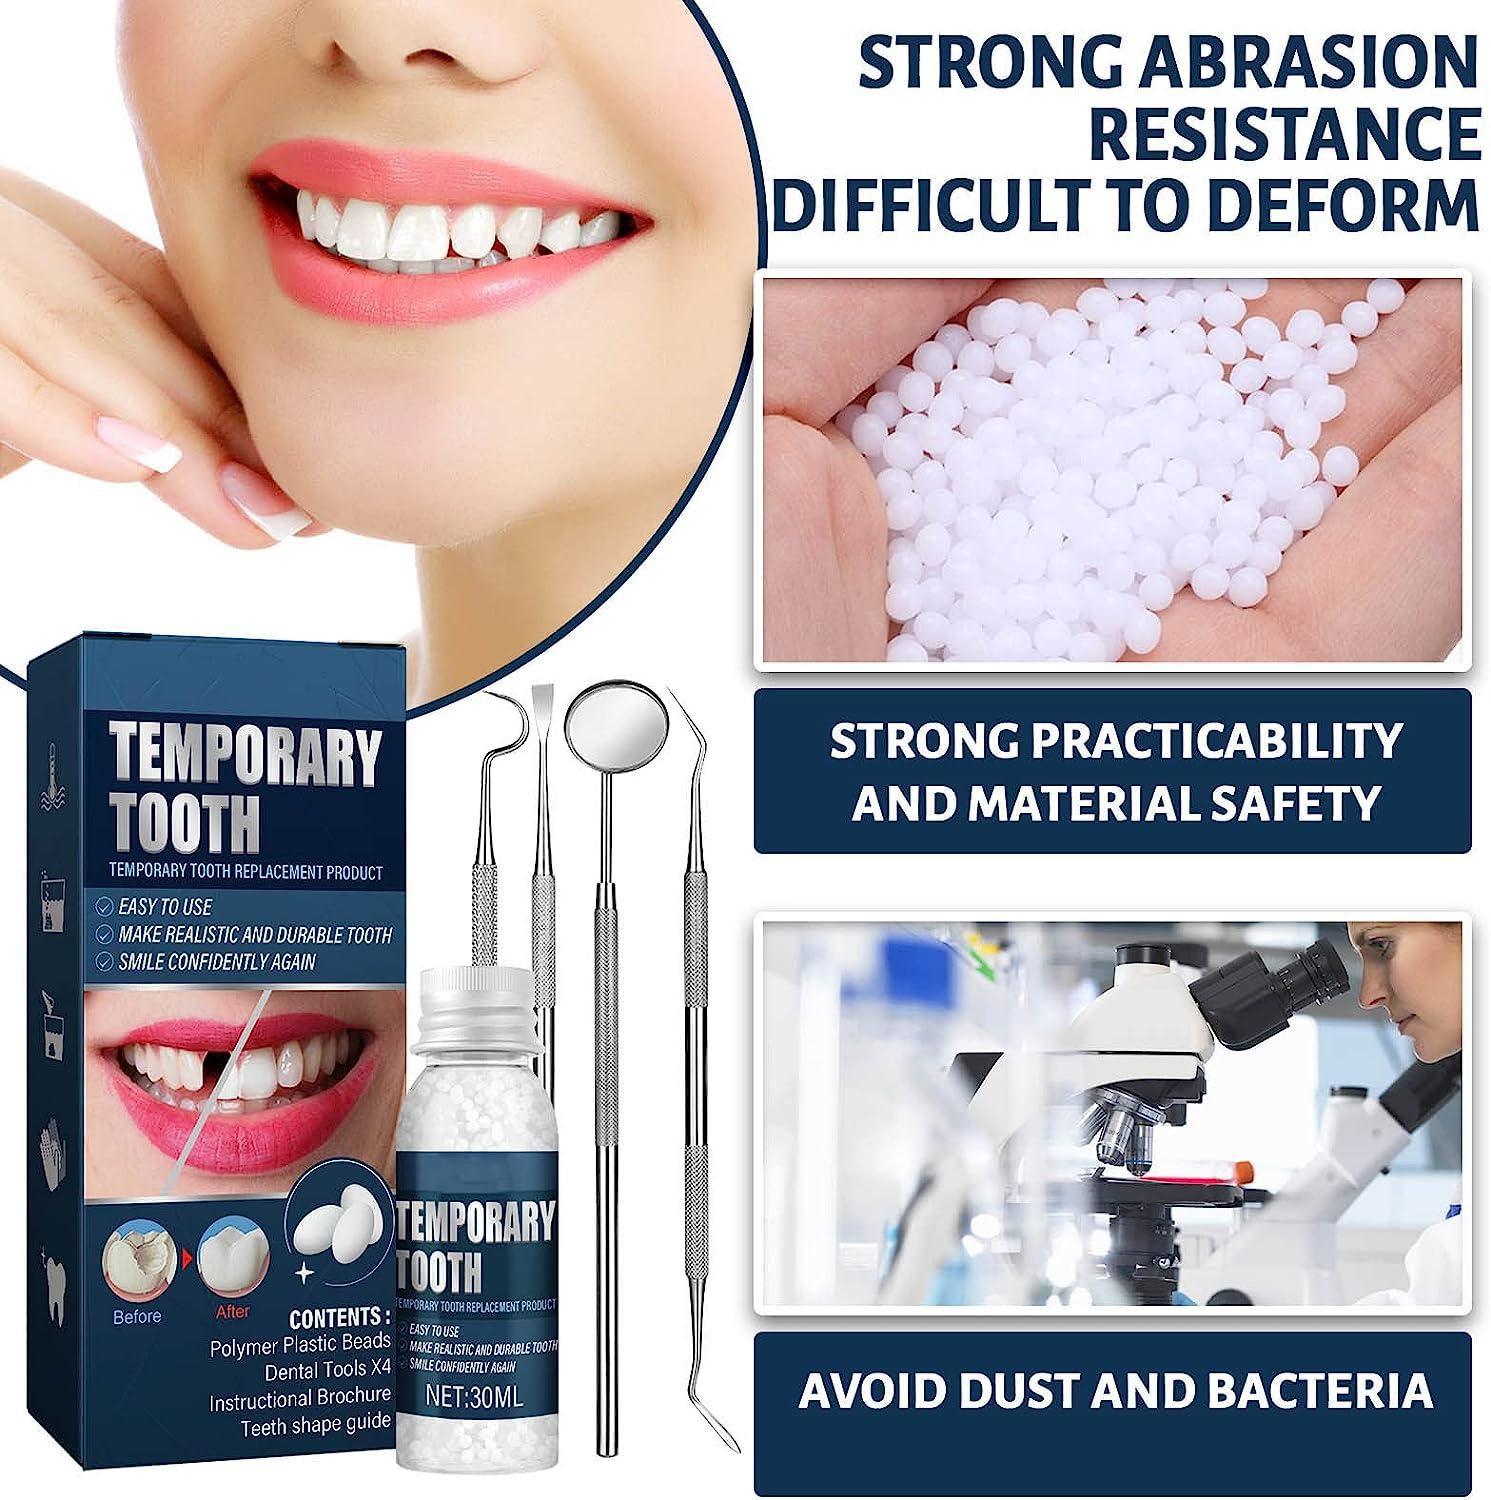 Moldable False Teeth Tooth Repair Granules, Teeth Repair Kit, Diy